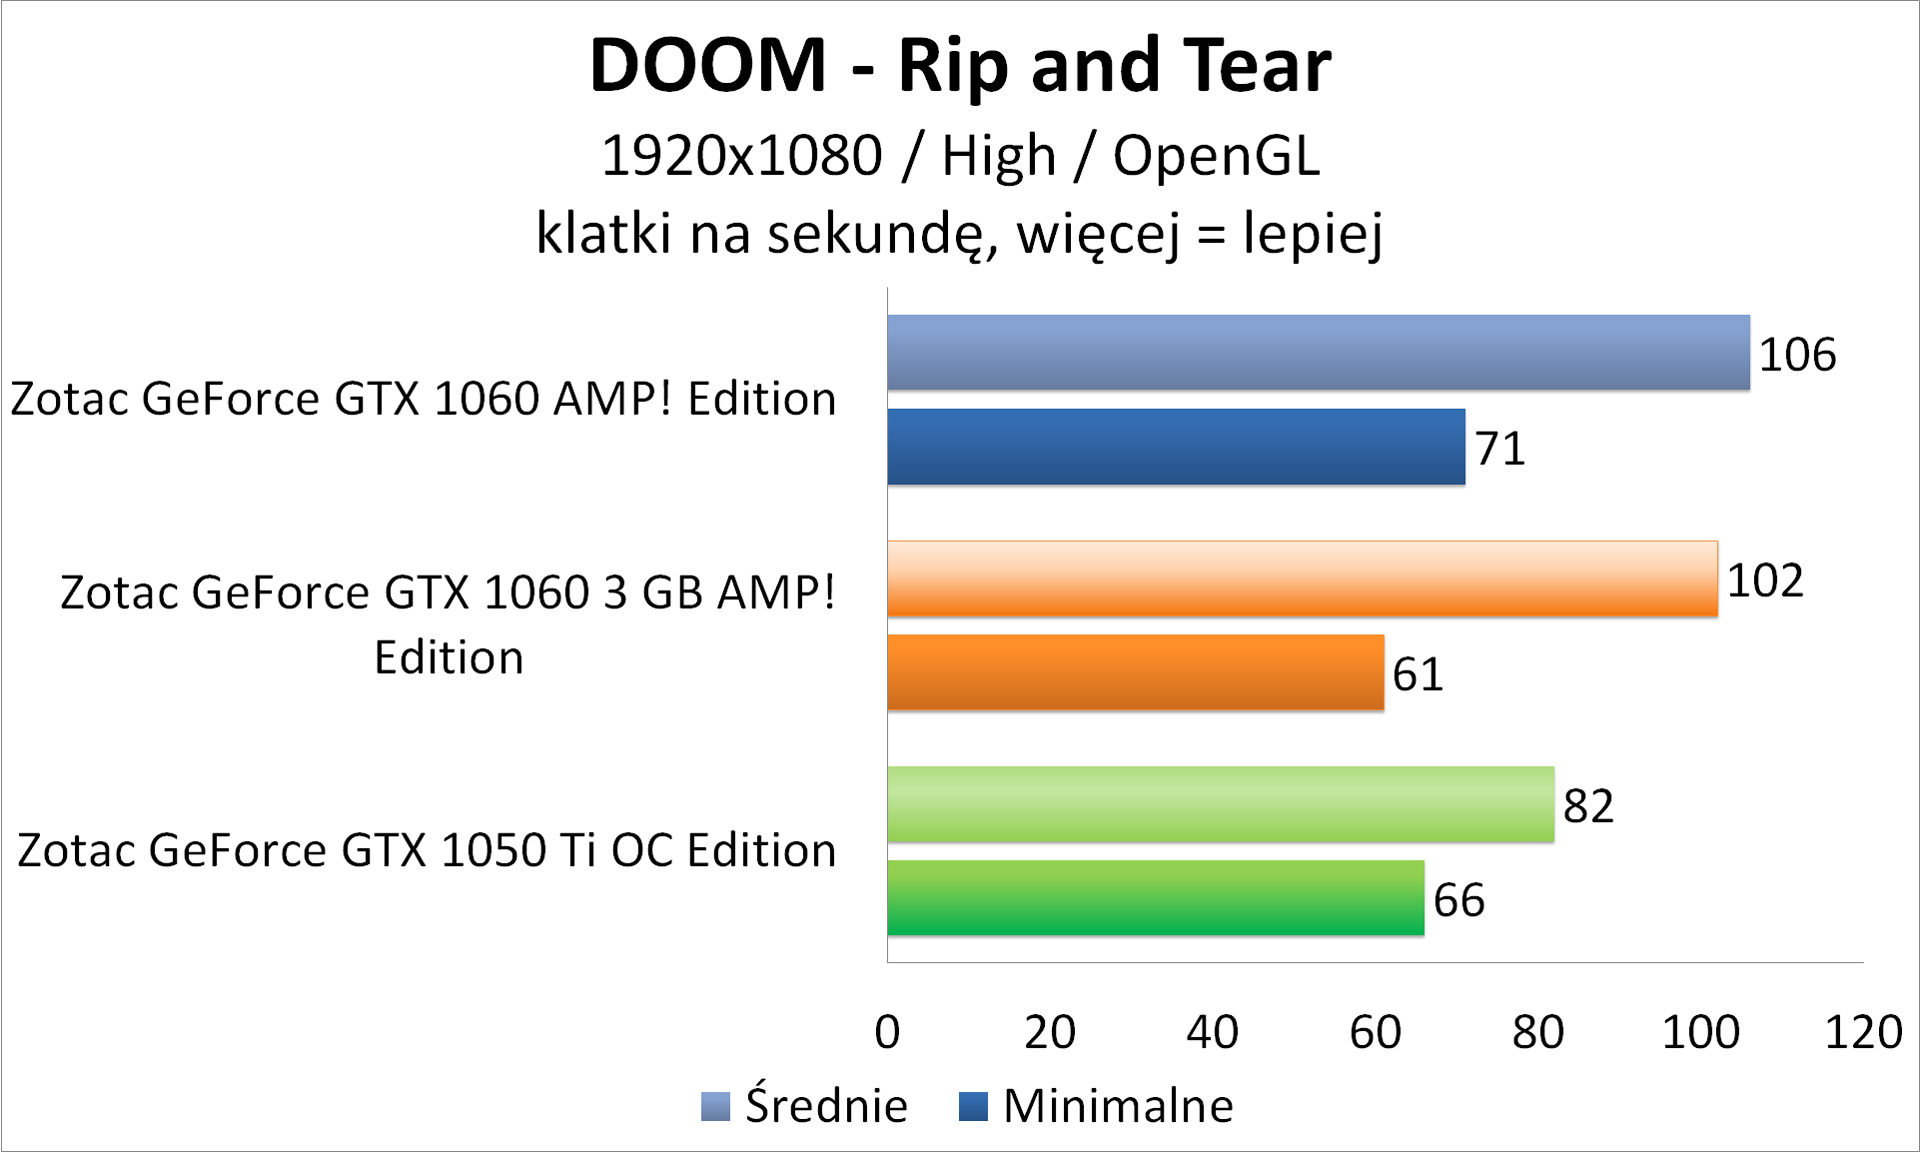 Zotac GeForce GTX 1050 Ti OC Edition - 3DMark - DOOM